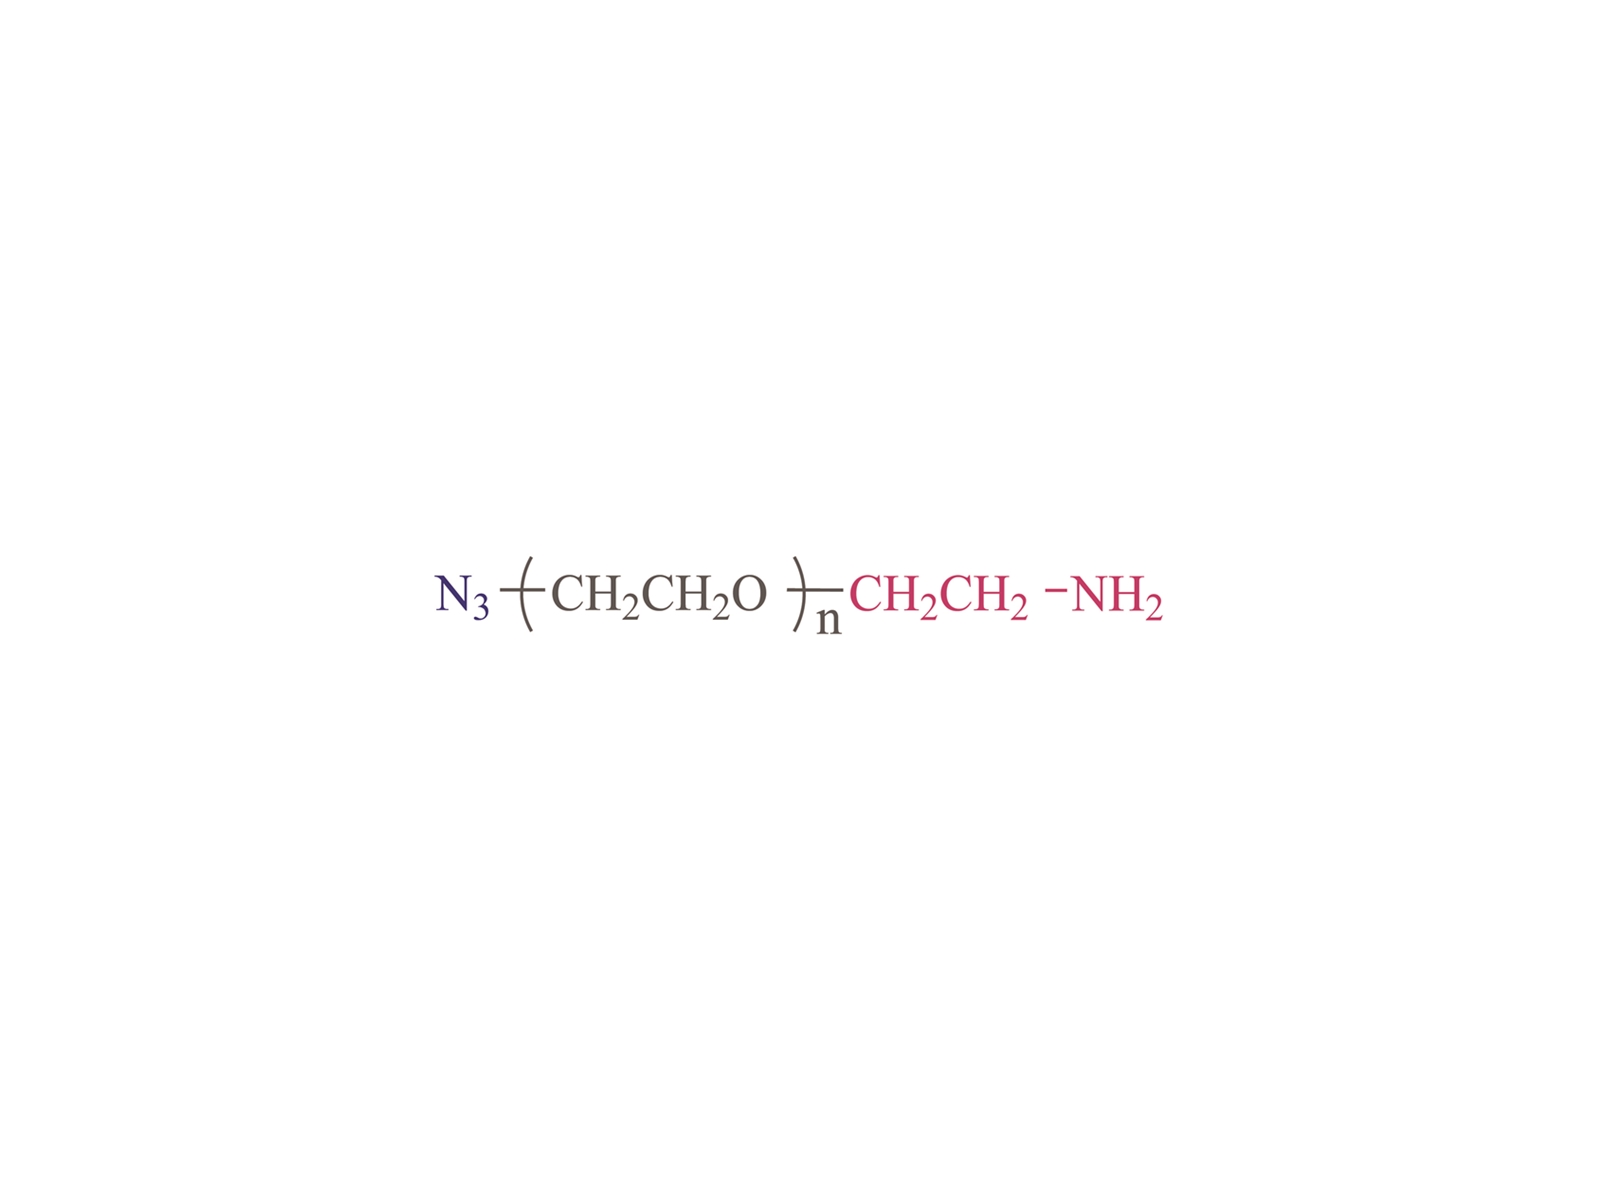 a-azido-ω-amino poli (etilen glikol) [N3-PEG-NH2] CAS: 464190-91-8,166388-57-4.167179-38-7.951671-92-4.516493-93-9, 957486-82-7,133154-77-0,857891-82-8.912849-73-1,1800414-71-4